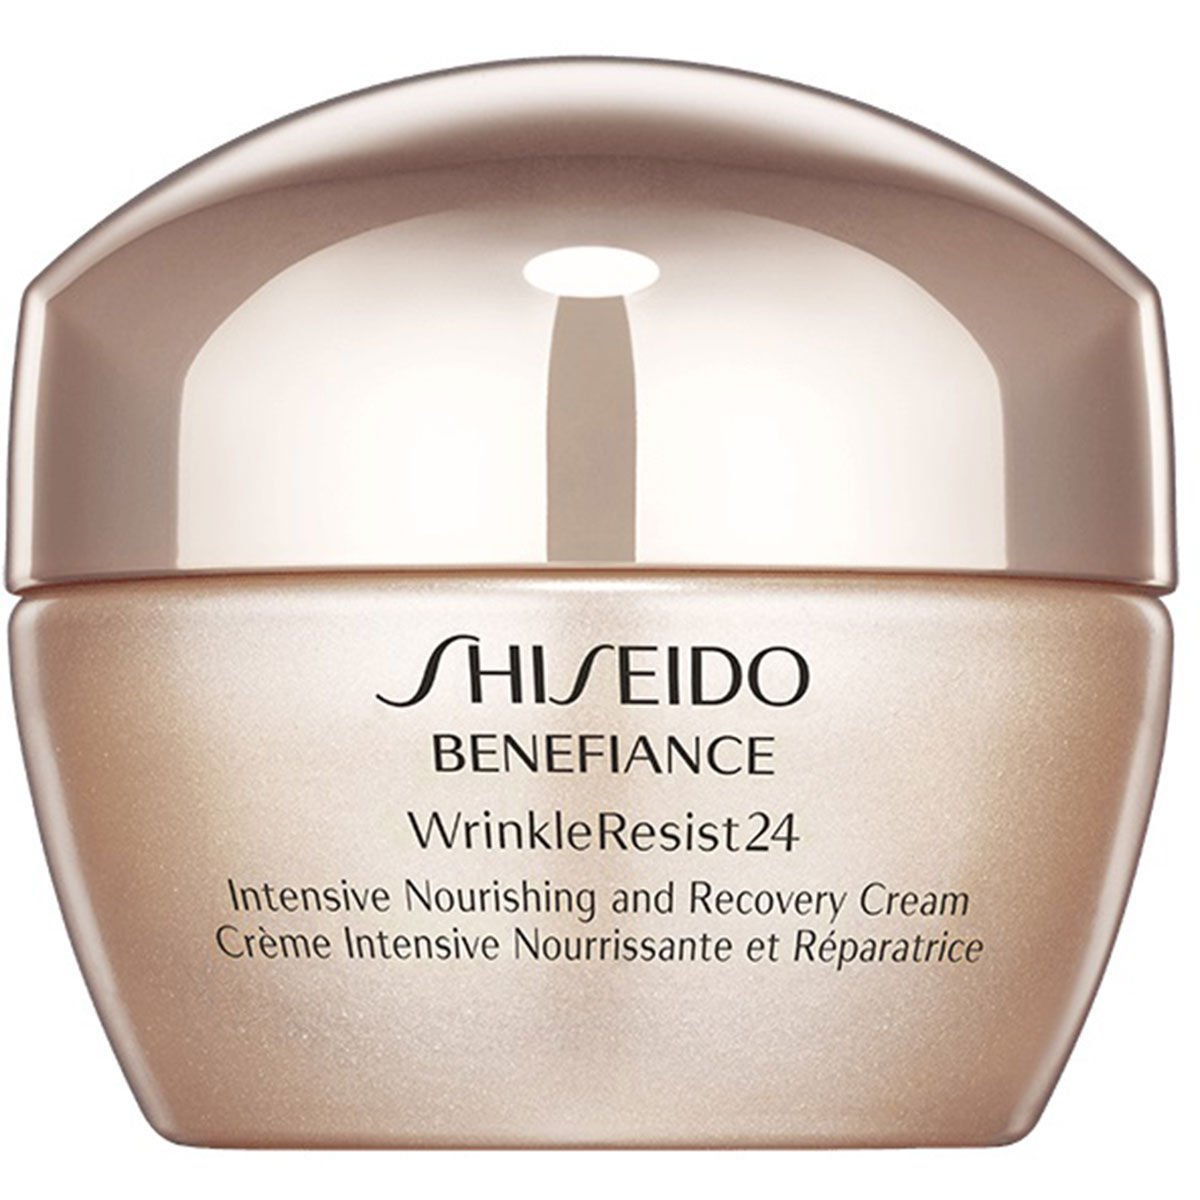 Shiseido de. Shiseido Benefiance wrinkleresist24. Шисейдо Бенефианс крем для лица. Shiseido Benefiance wrinkleresist24 Day Cream. Shiseido wrinkleresist24 Intensive Nourishing & Recovery 50 мл.